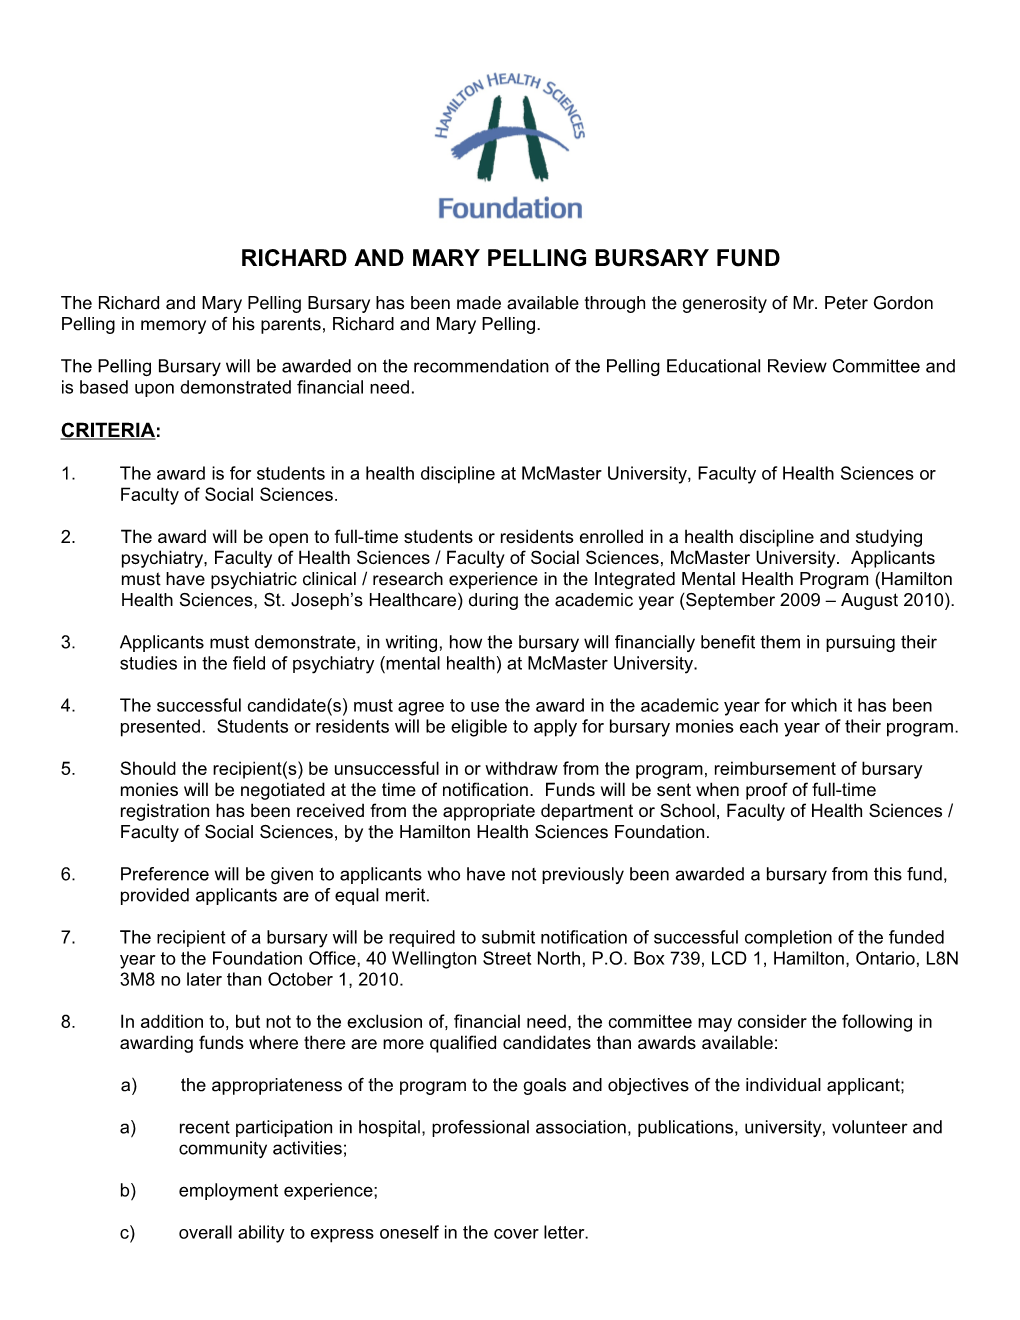 Richard and Mary Pelling Bursary Fund